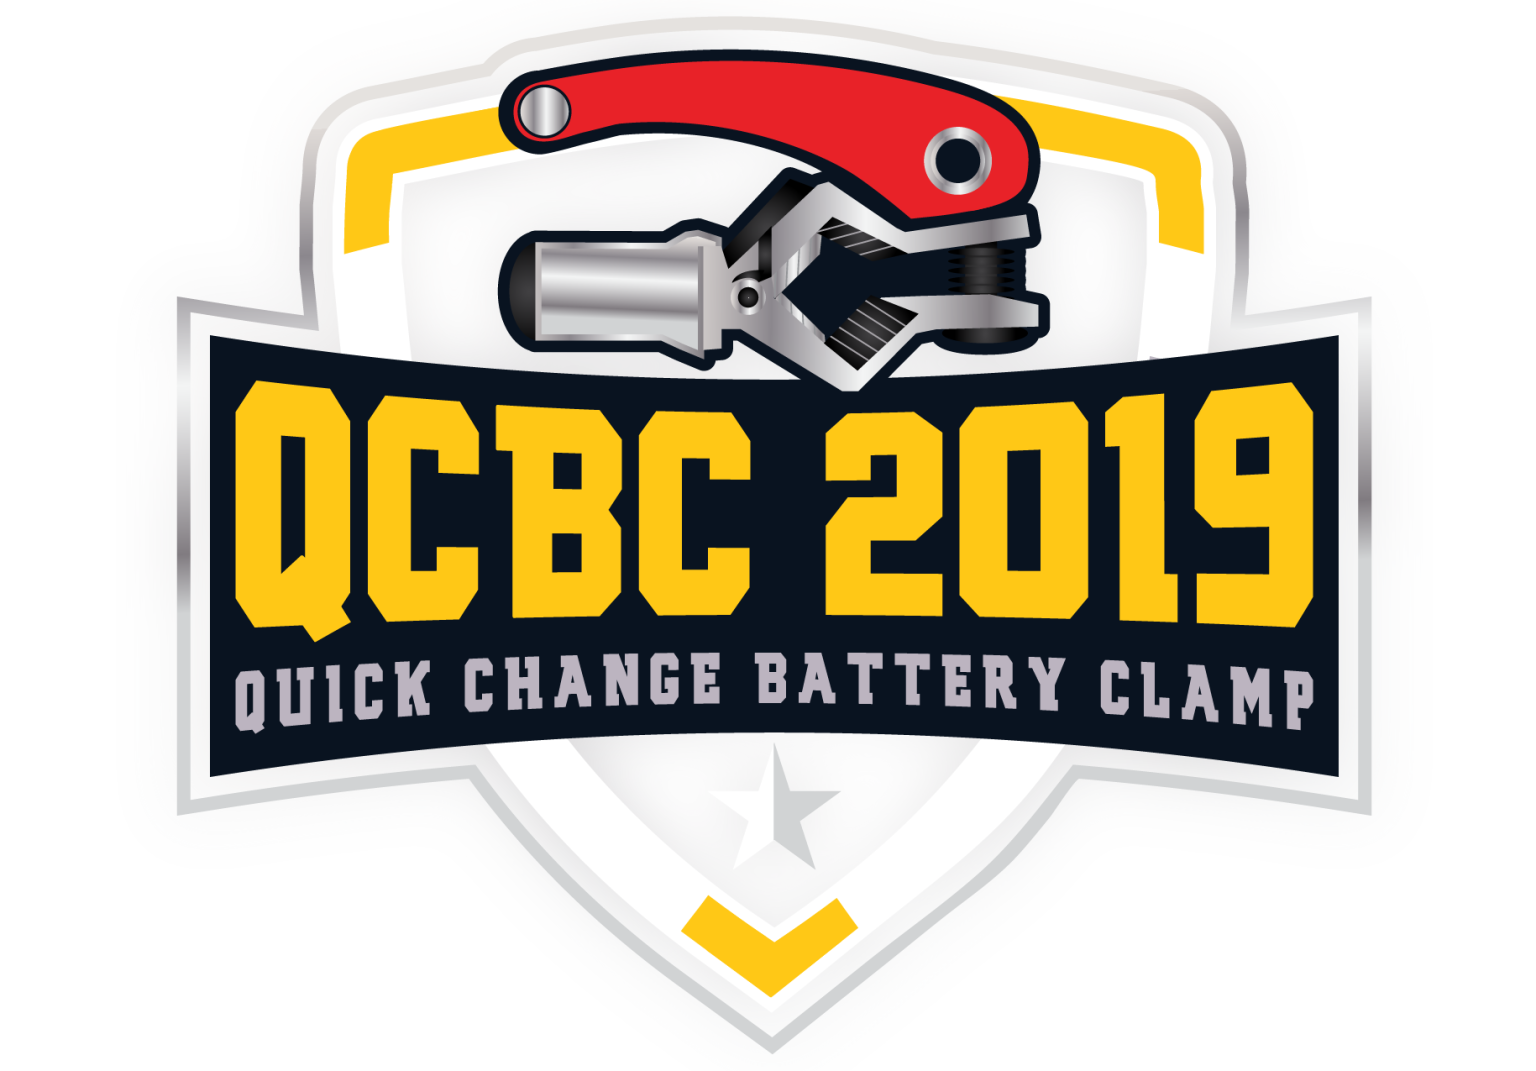 QCBC 2019'